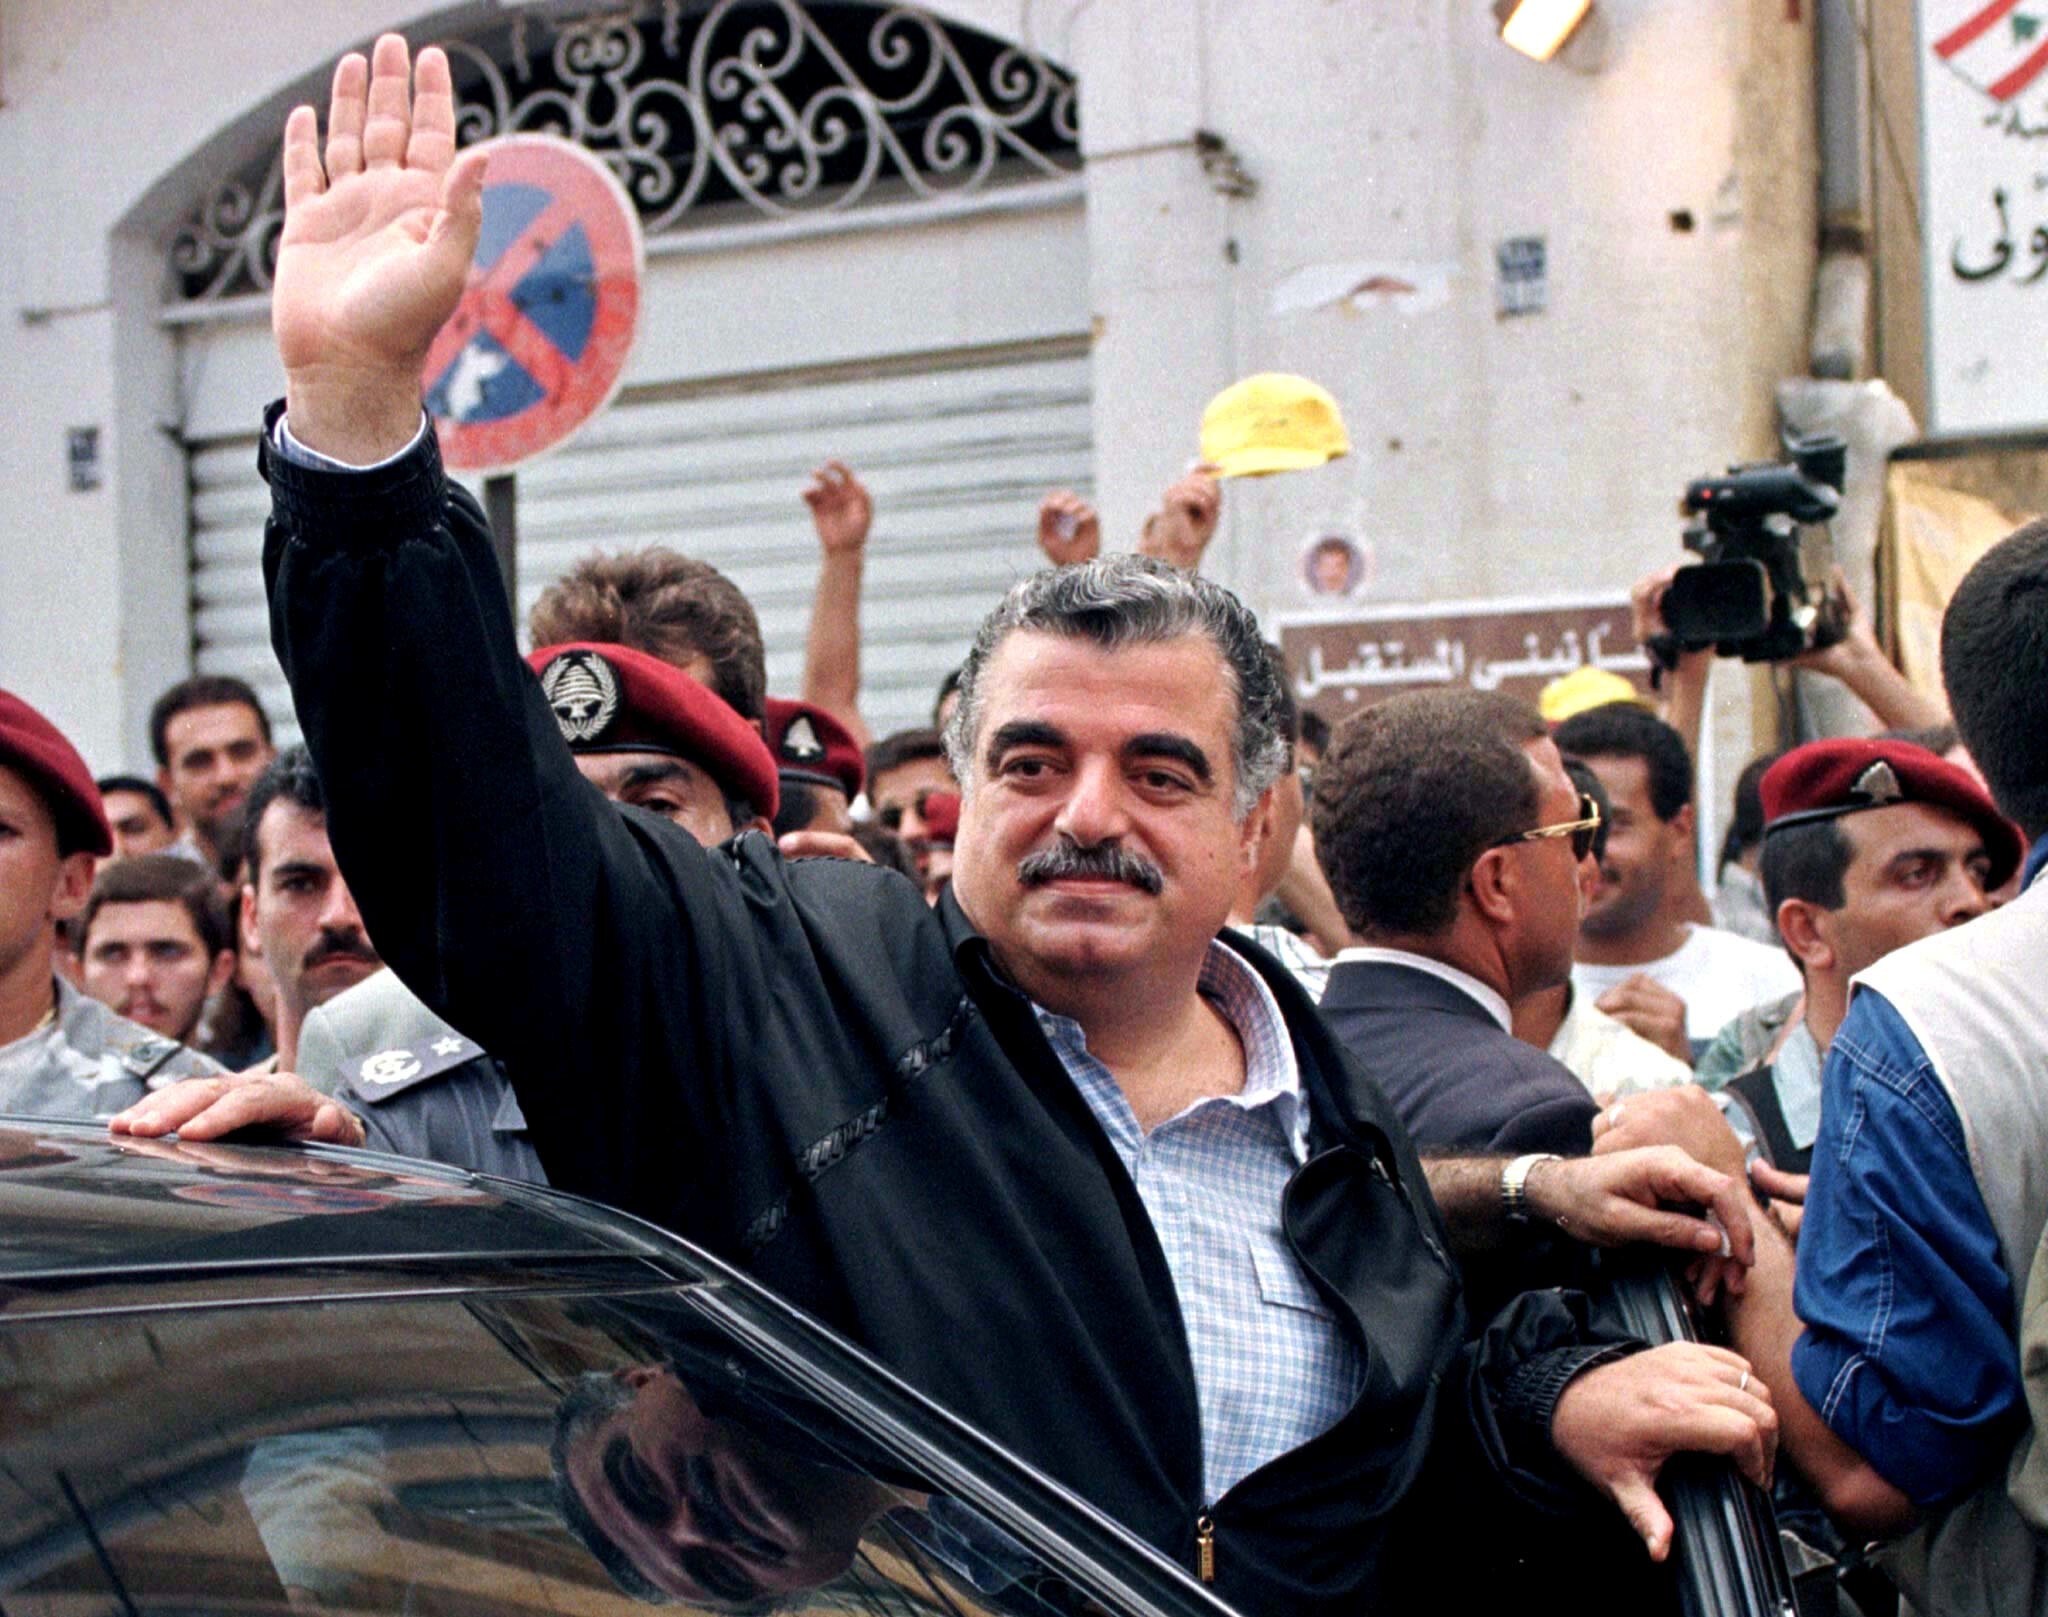 2005 Hariri assassination: Hezbollah operative sentenced to five life terms